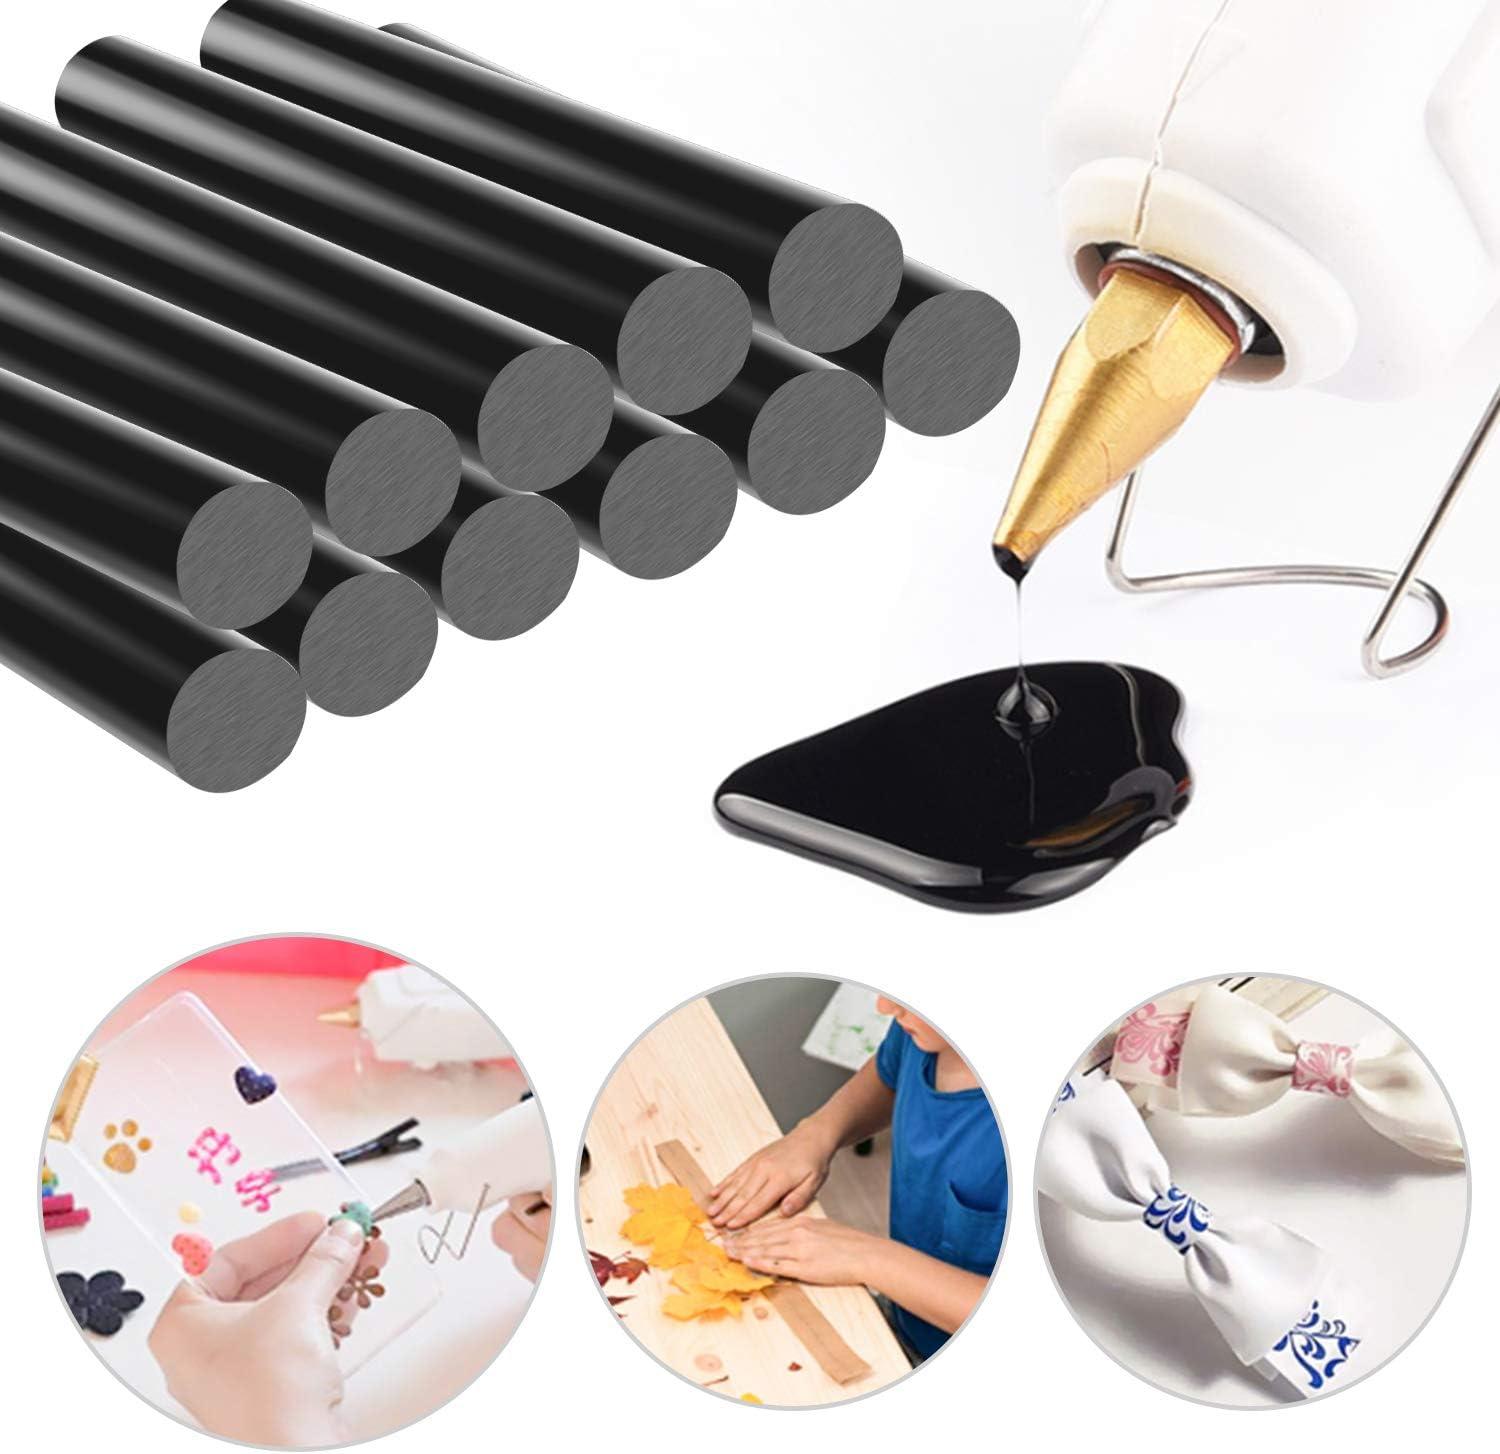 Black Dentpuller Glue Sticks 24-Pack, Hot Melt, Glues, Adhesive and  Bonding, Chemical Product